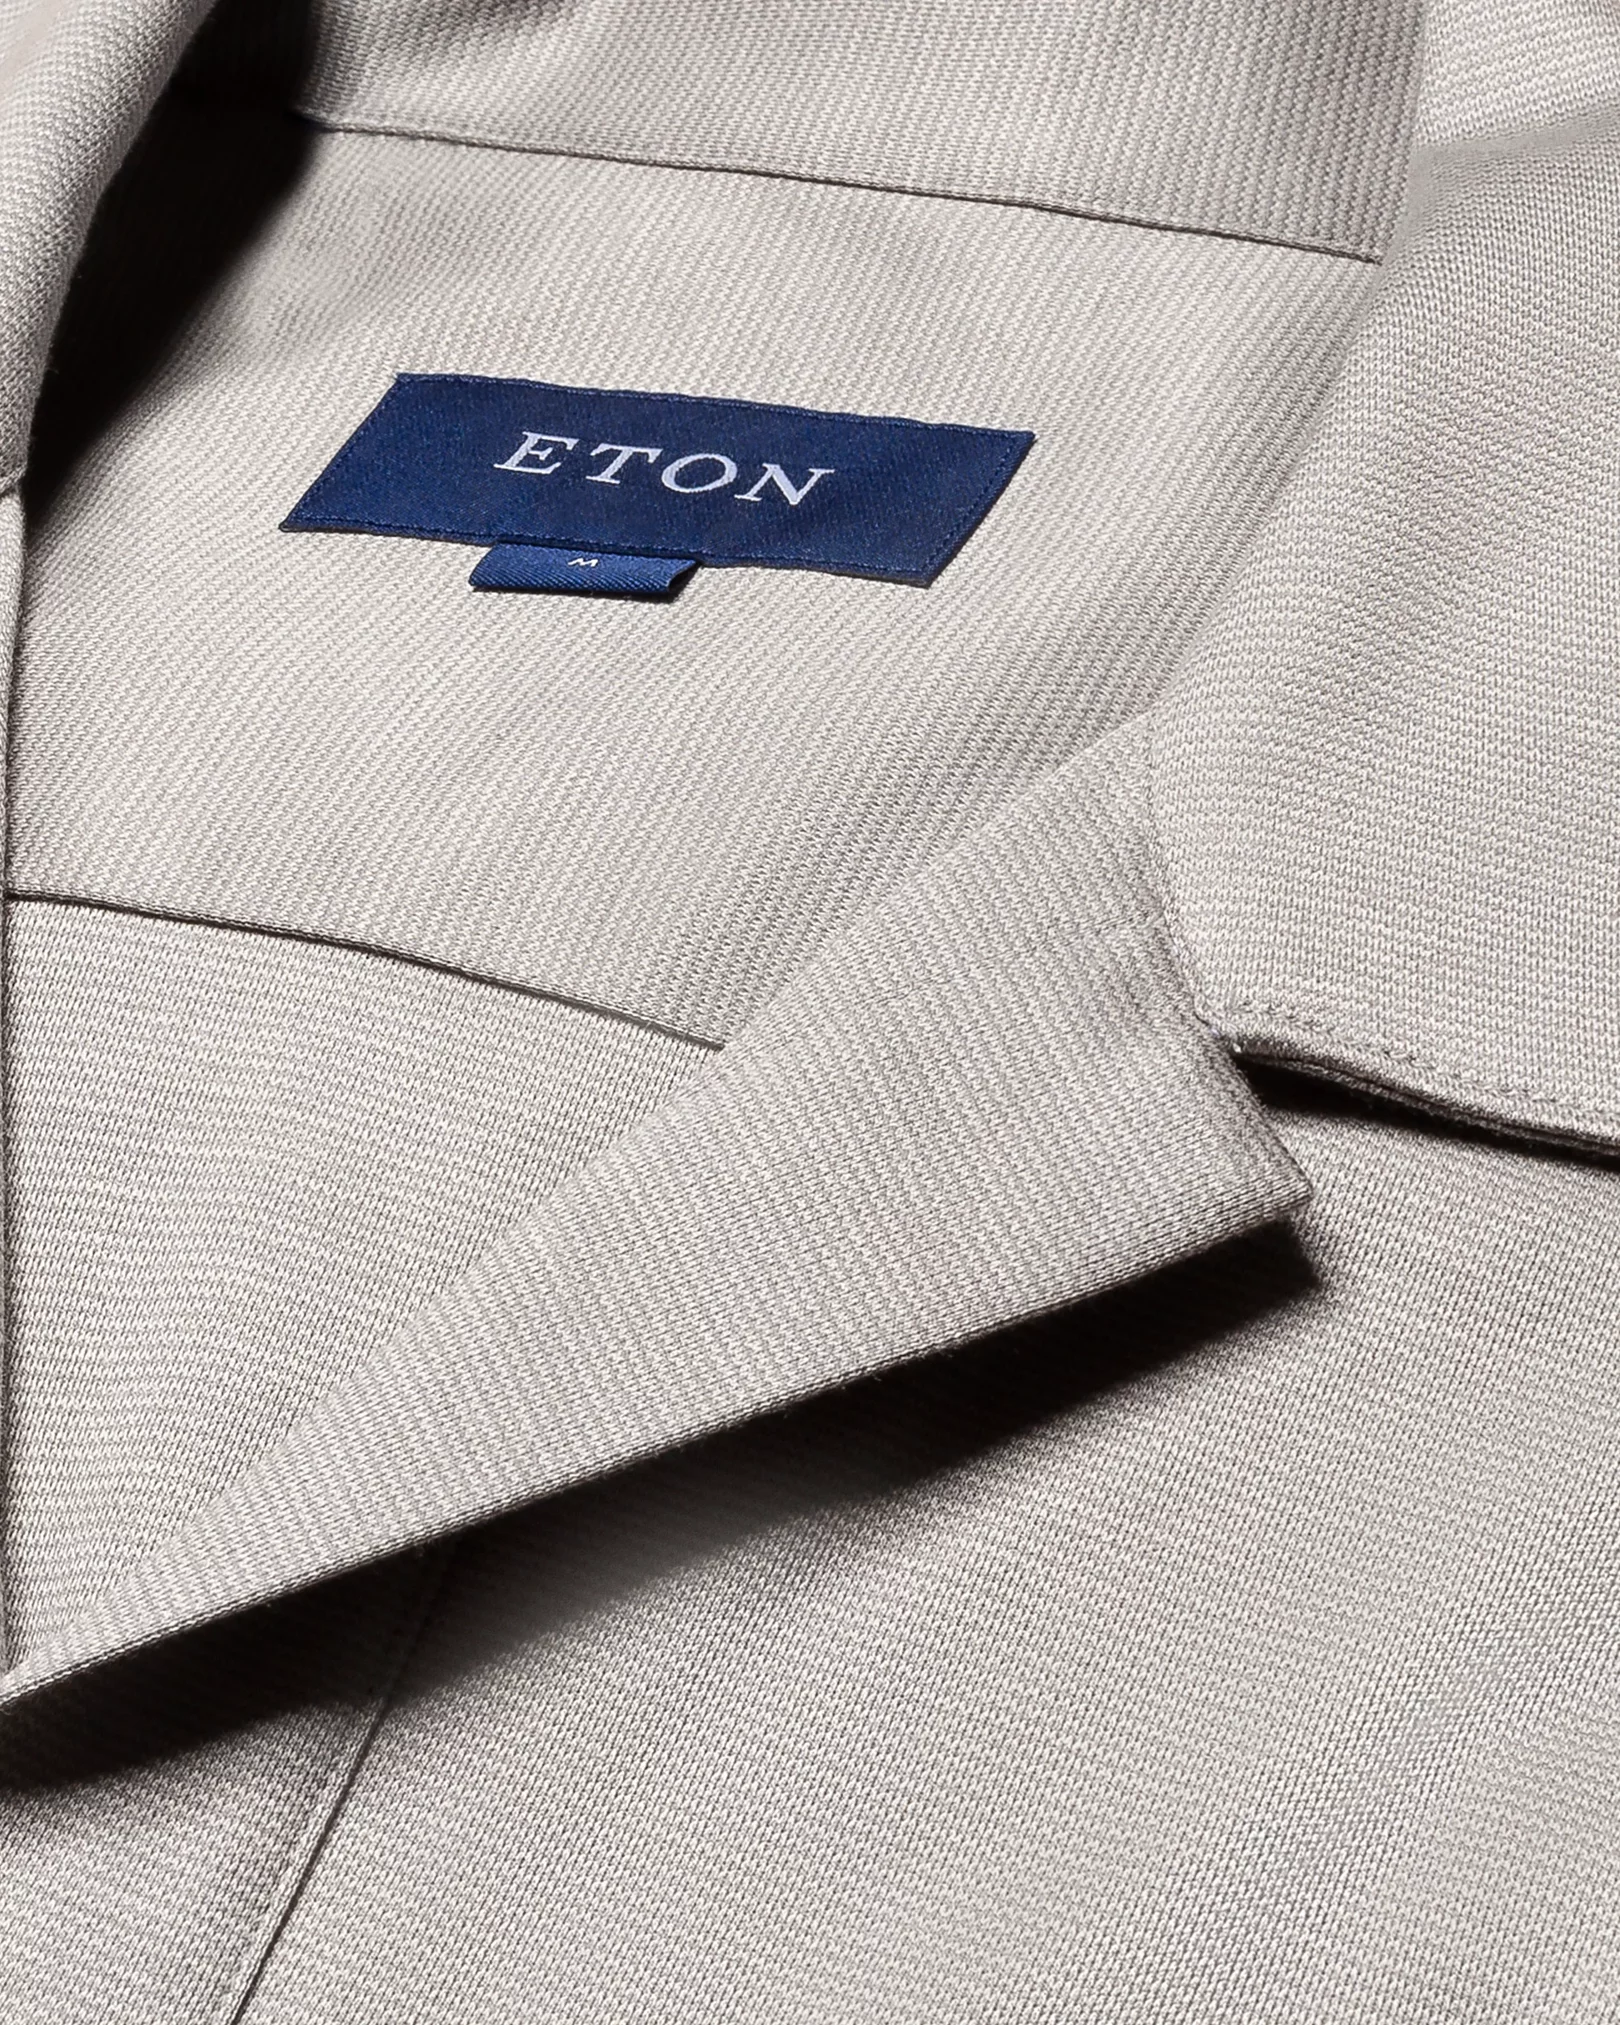 Eton - light grey interlock jersey open collar